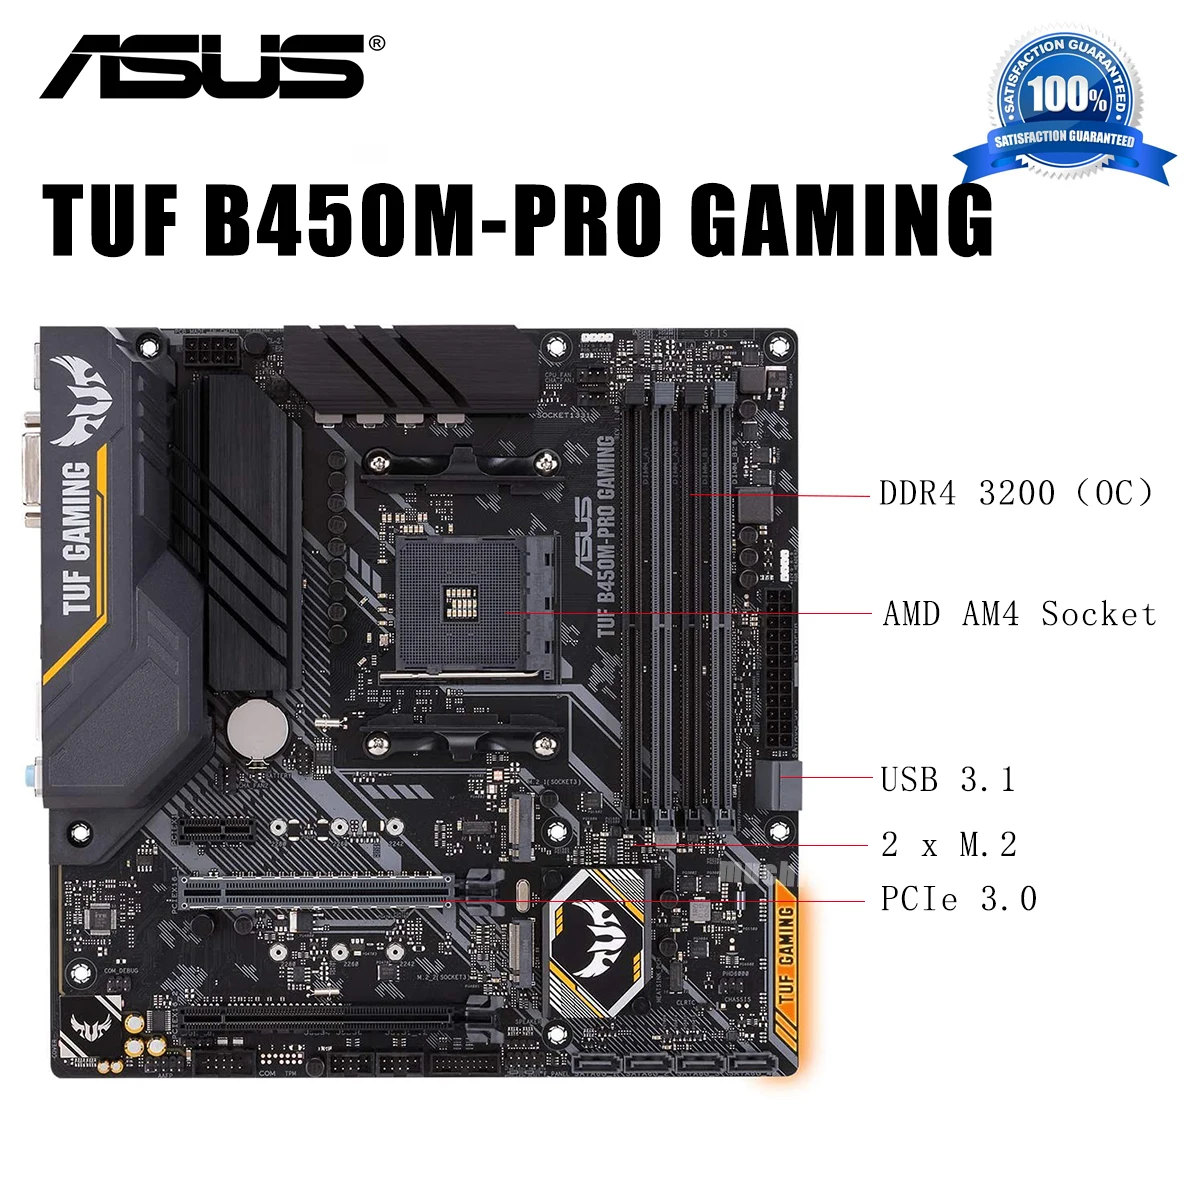 Socket AM4 Asus TUF B450M-PRO GAMING Motherboard DDR4 PCI-E 3.0 DVI USB3.1 Gen 1 64GB DDR4 AMD B450 Gaming Placa-Mãe AM4 New